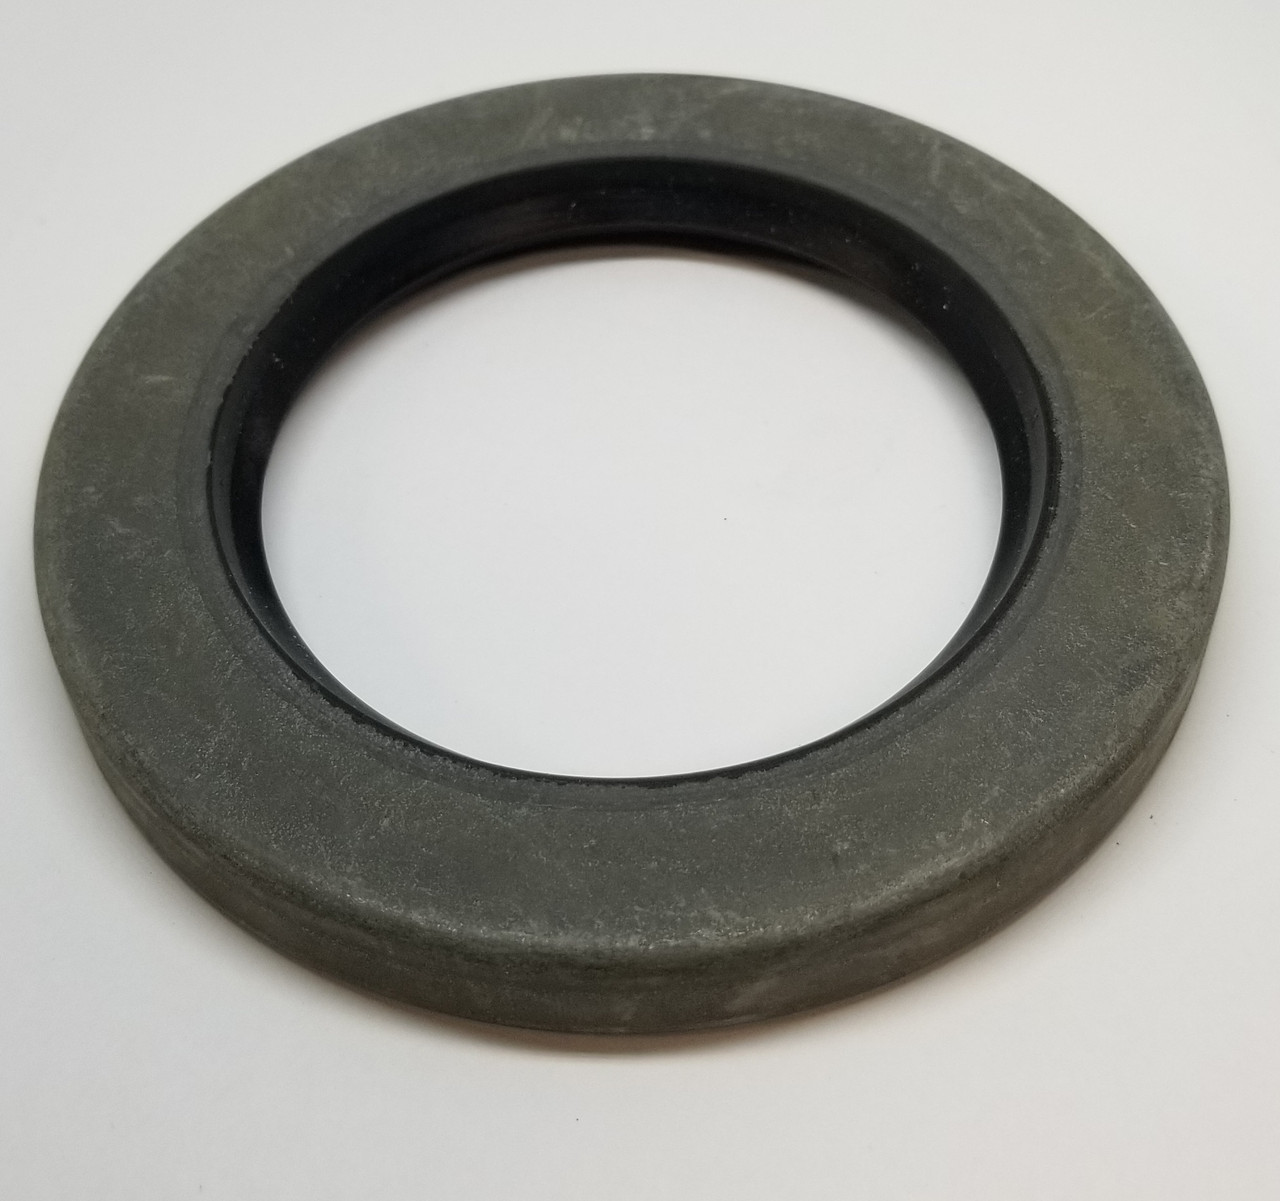 95mm (3.74") Metric Reinforced Metal Single Lip Nitrile Oil Seal  95X130X13 CRSH13 R